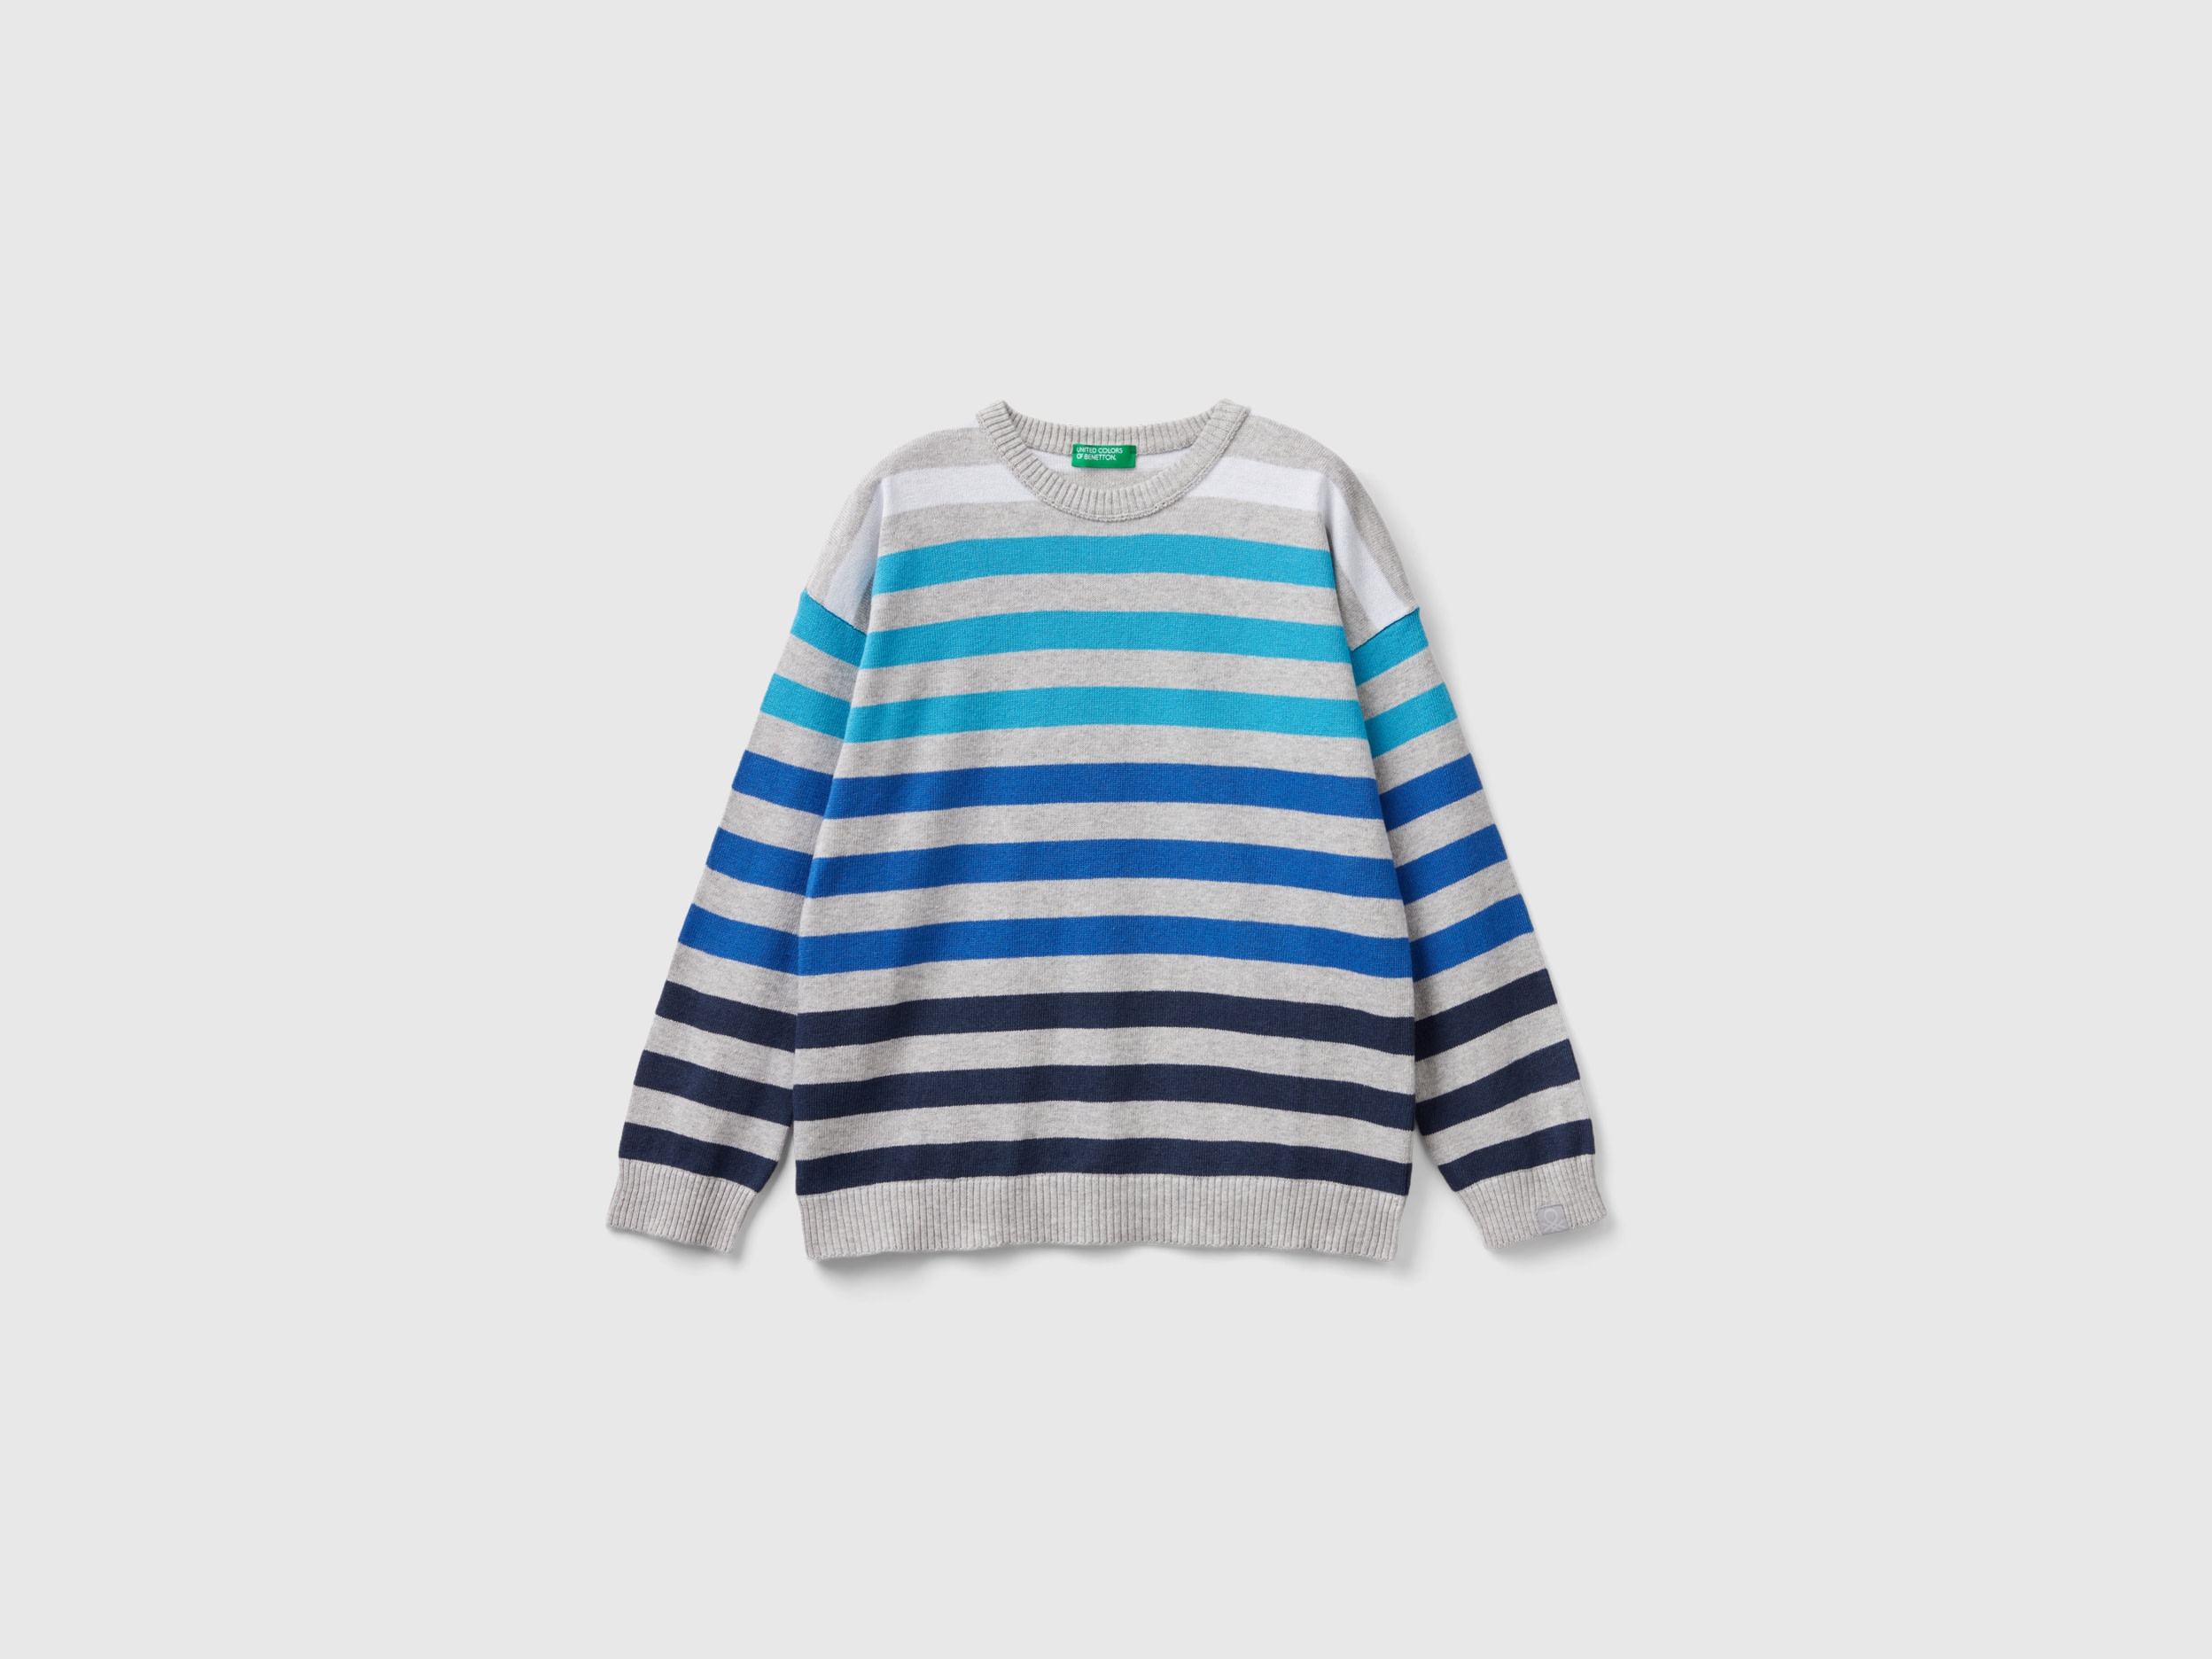 Image of Benetton, Striped Sweater, size M, Light Gray, Kids